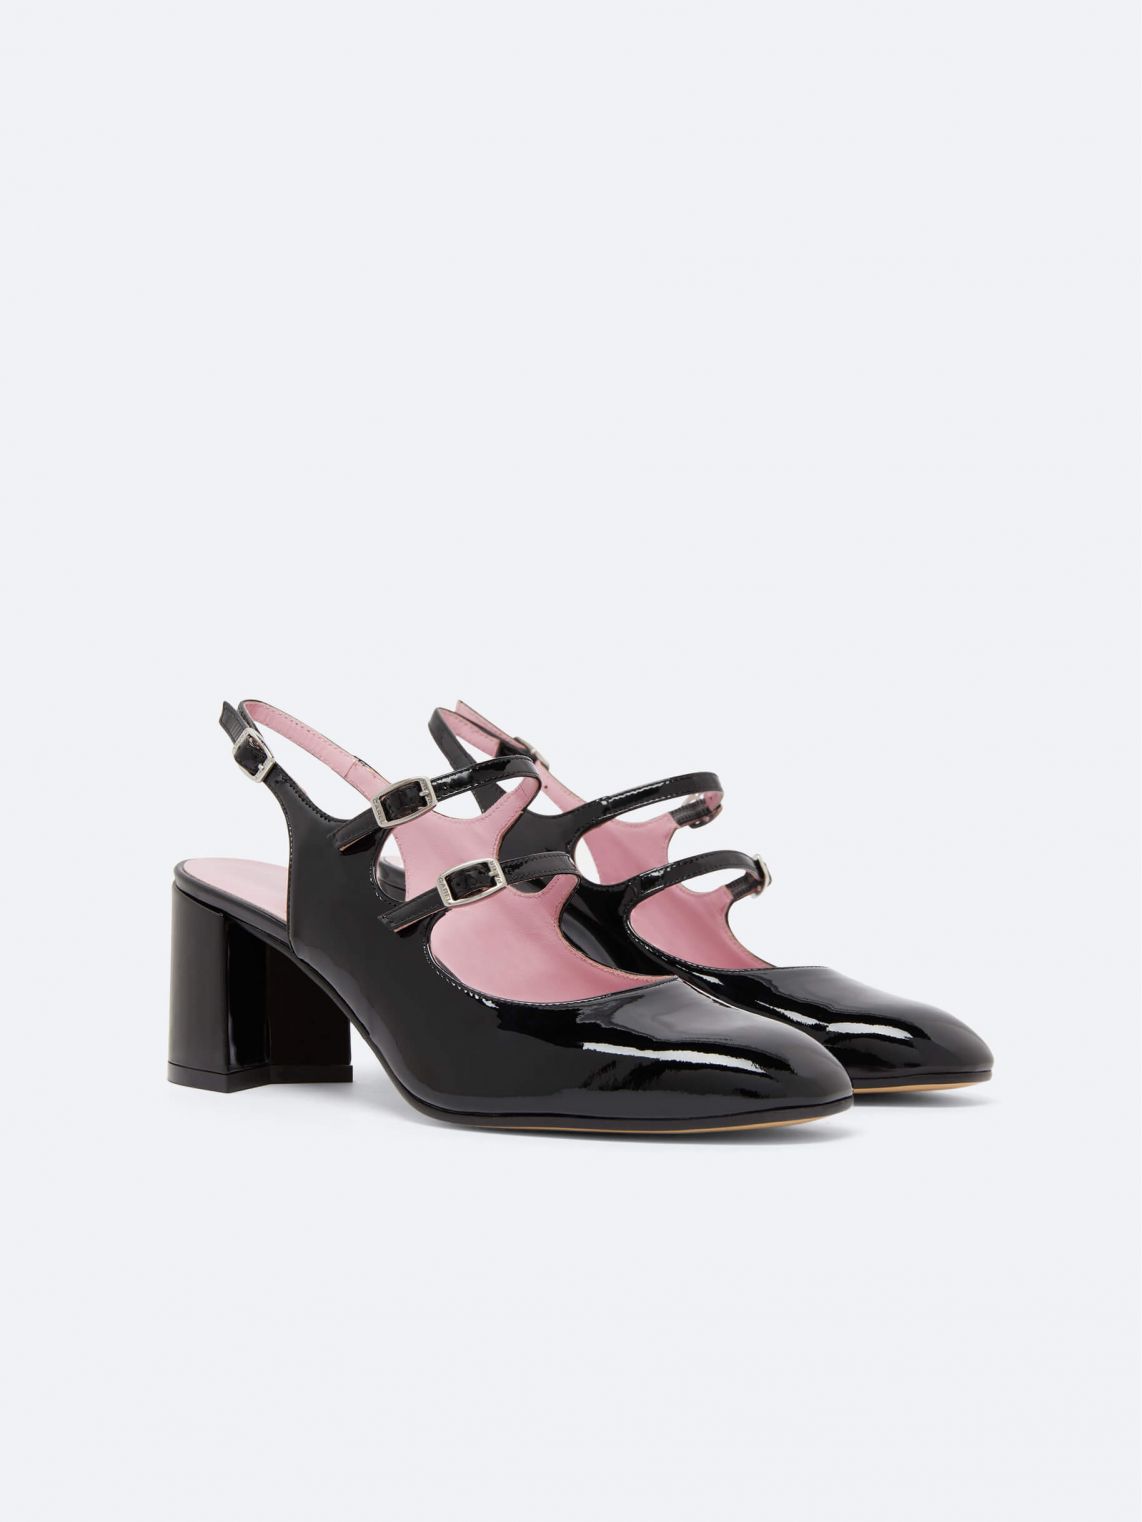 BANANA black patent leather slingback Mary Janes | Carel Paris Shoes